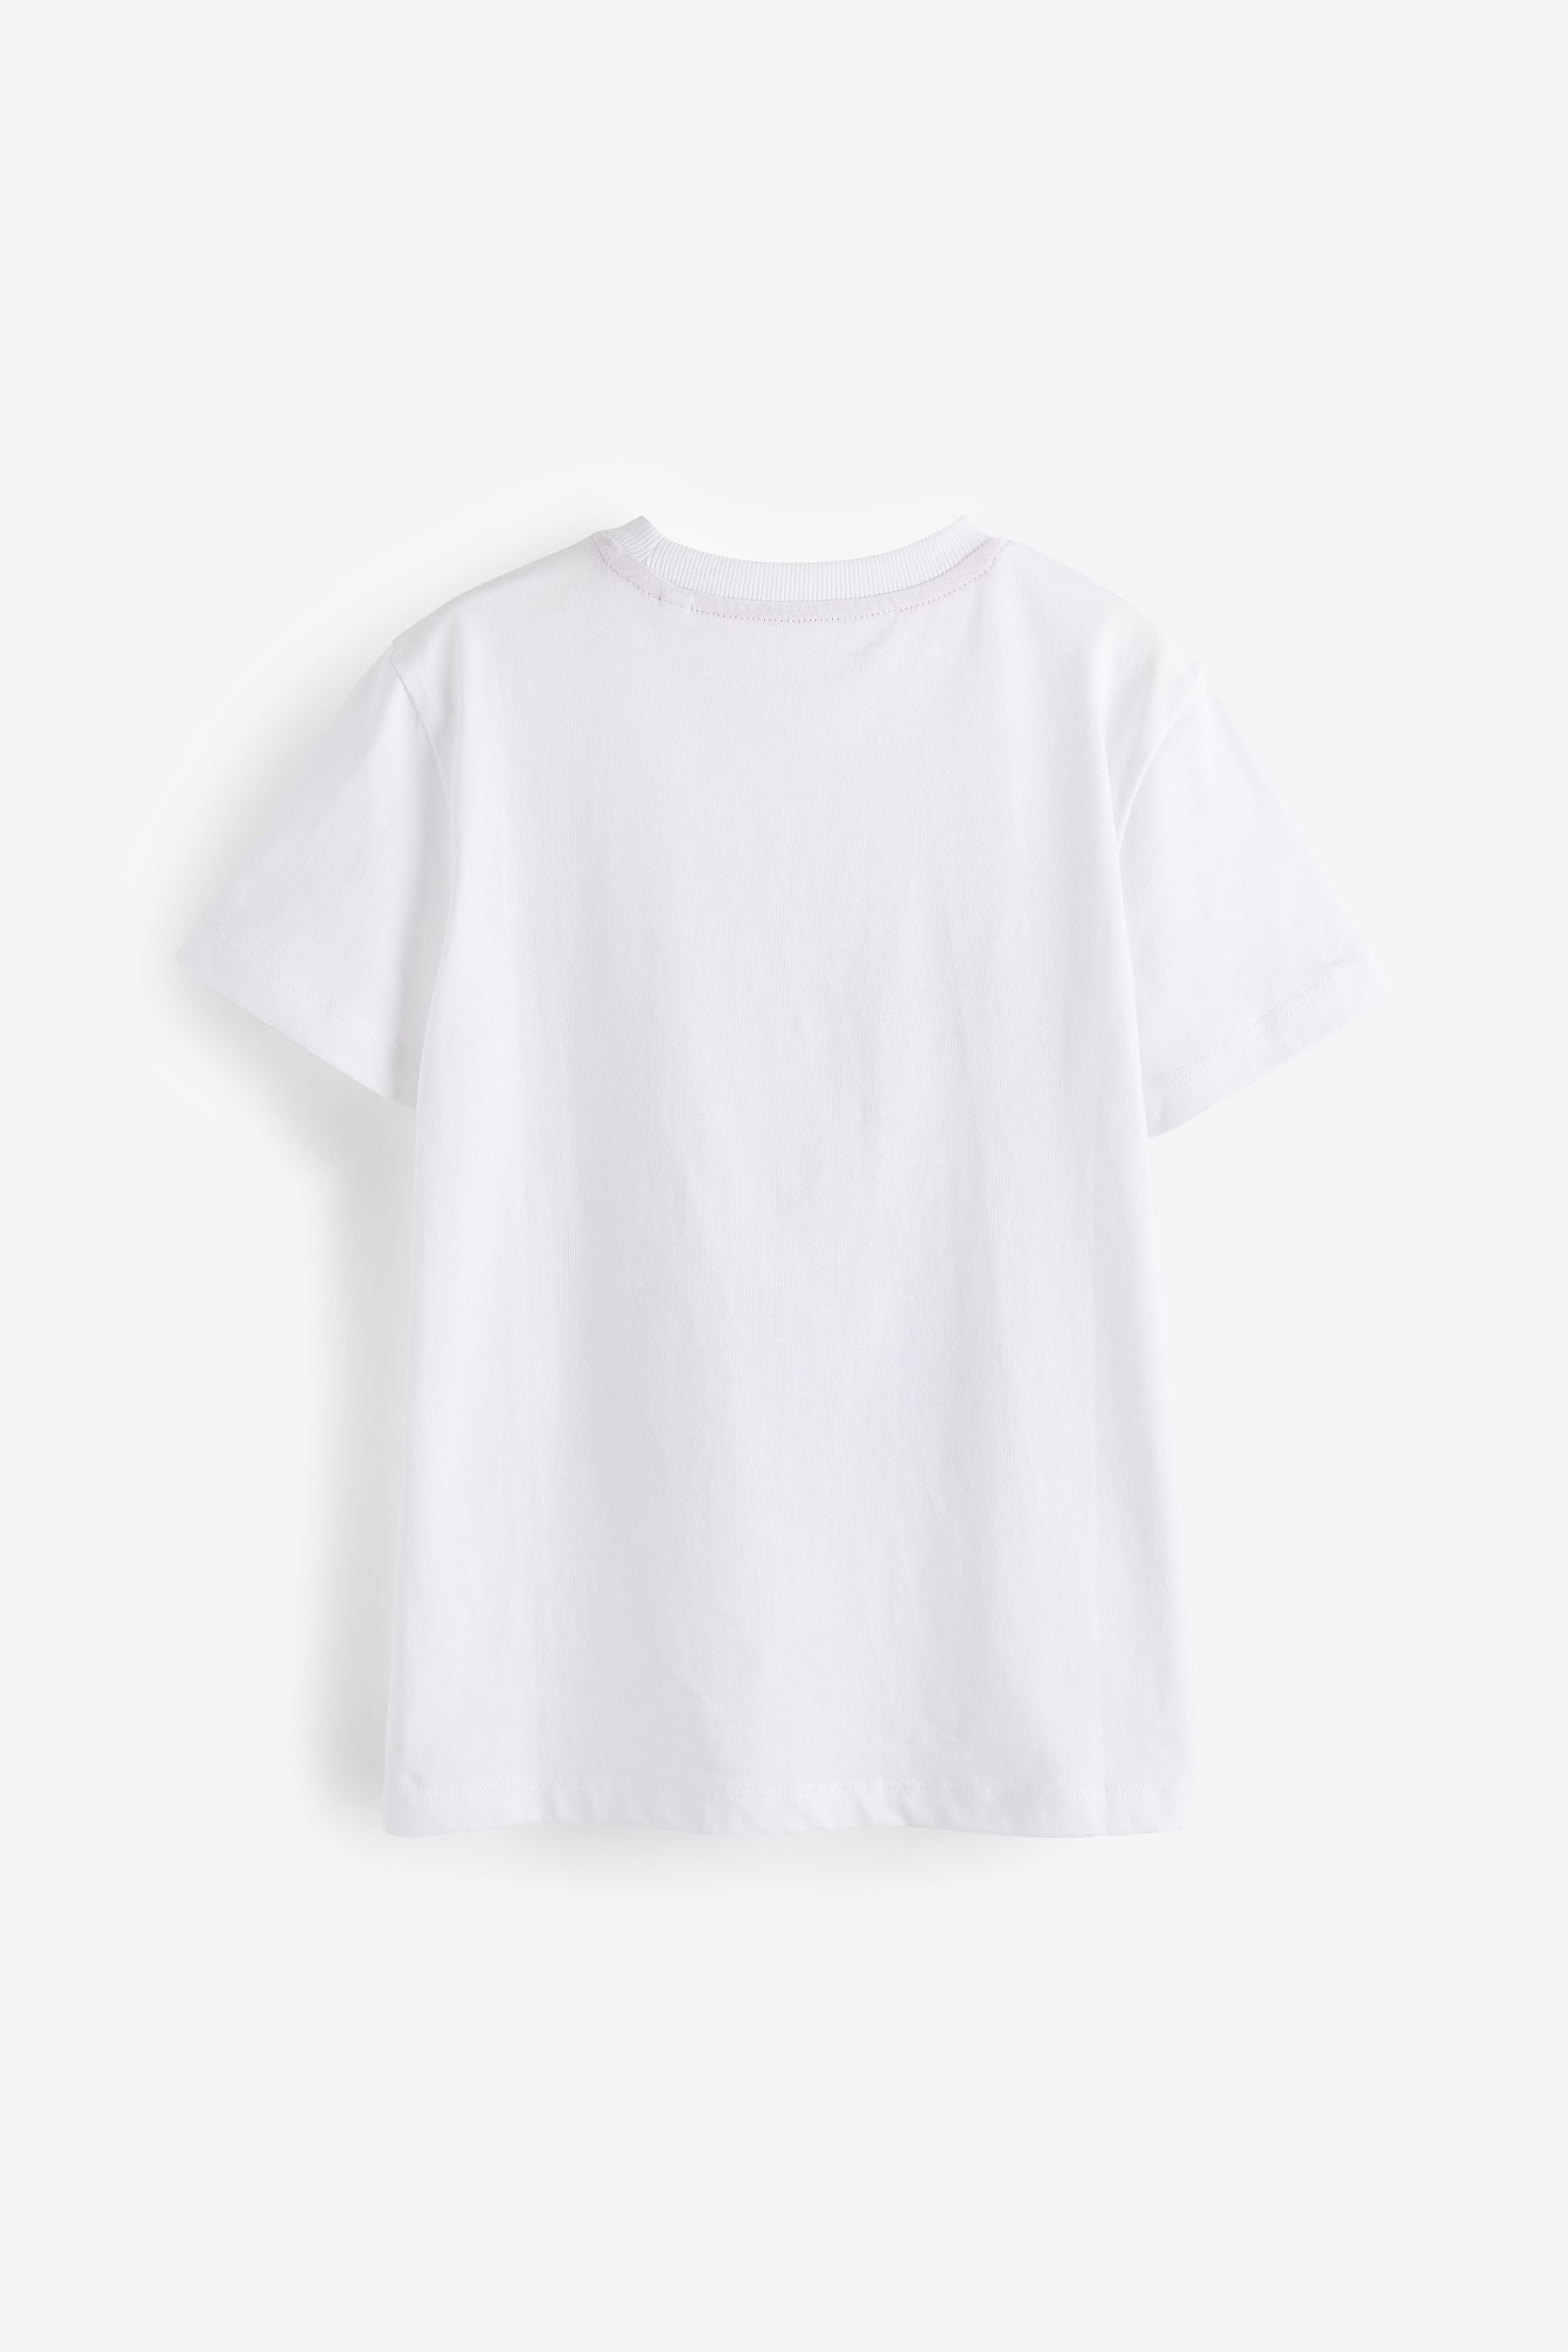 White Boat Short Sleeve Graphic T-Shirt (3-16yrs)